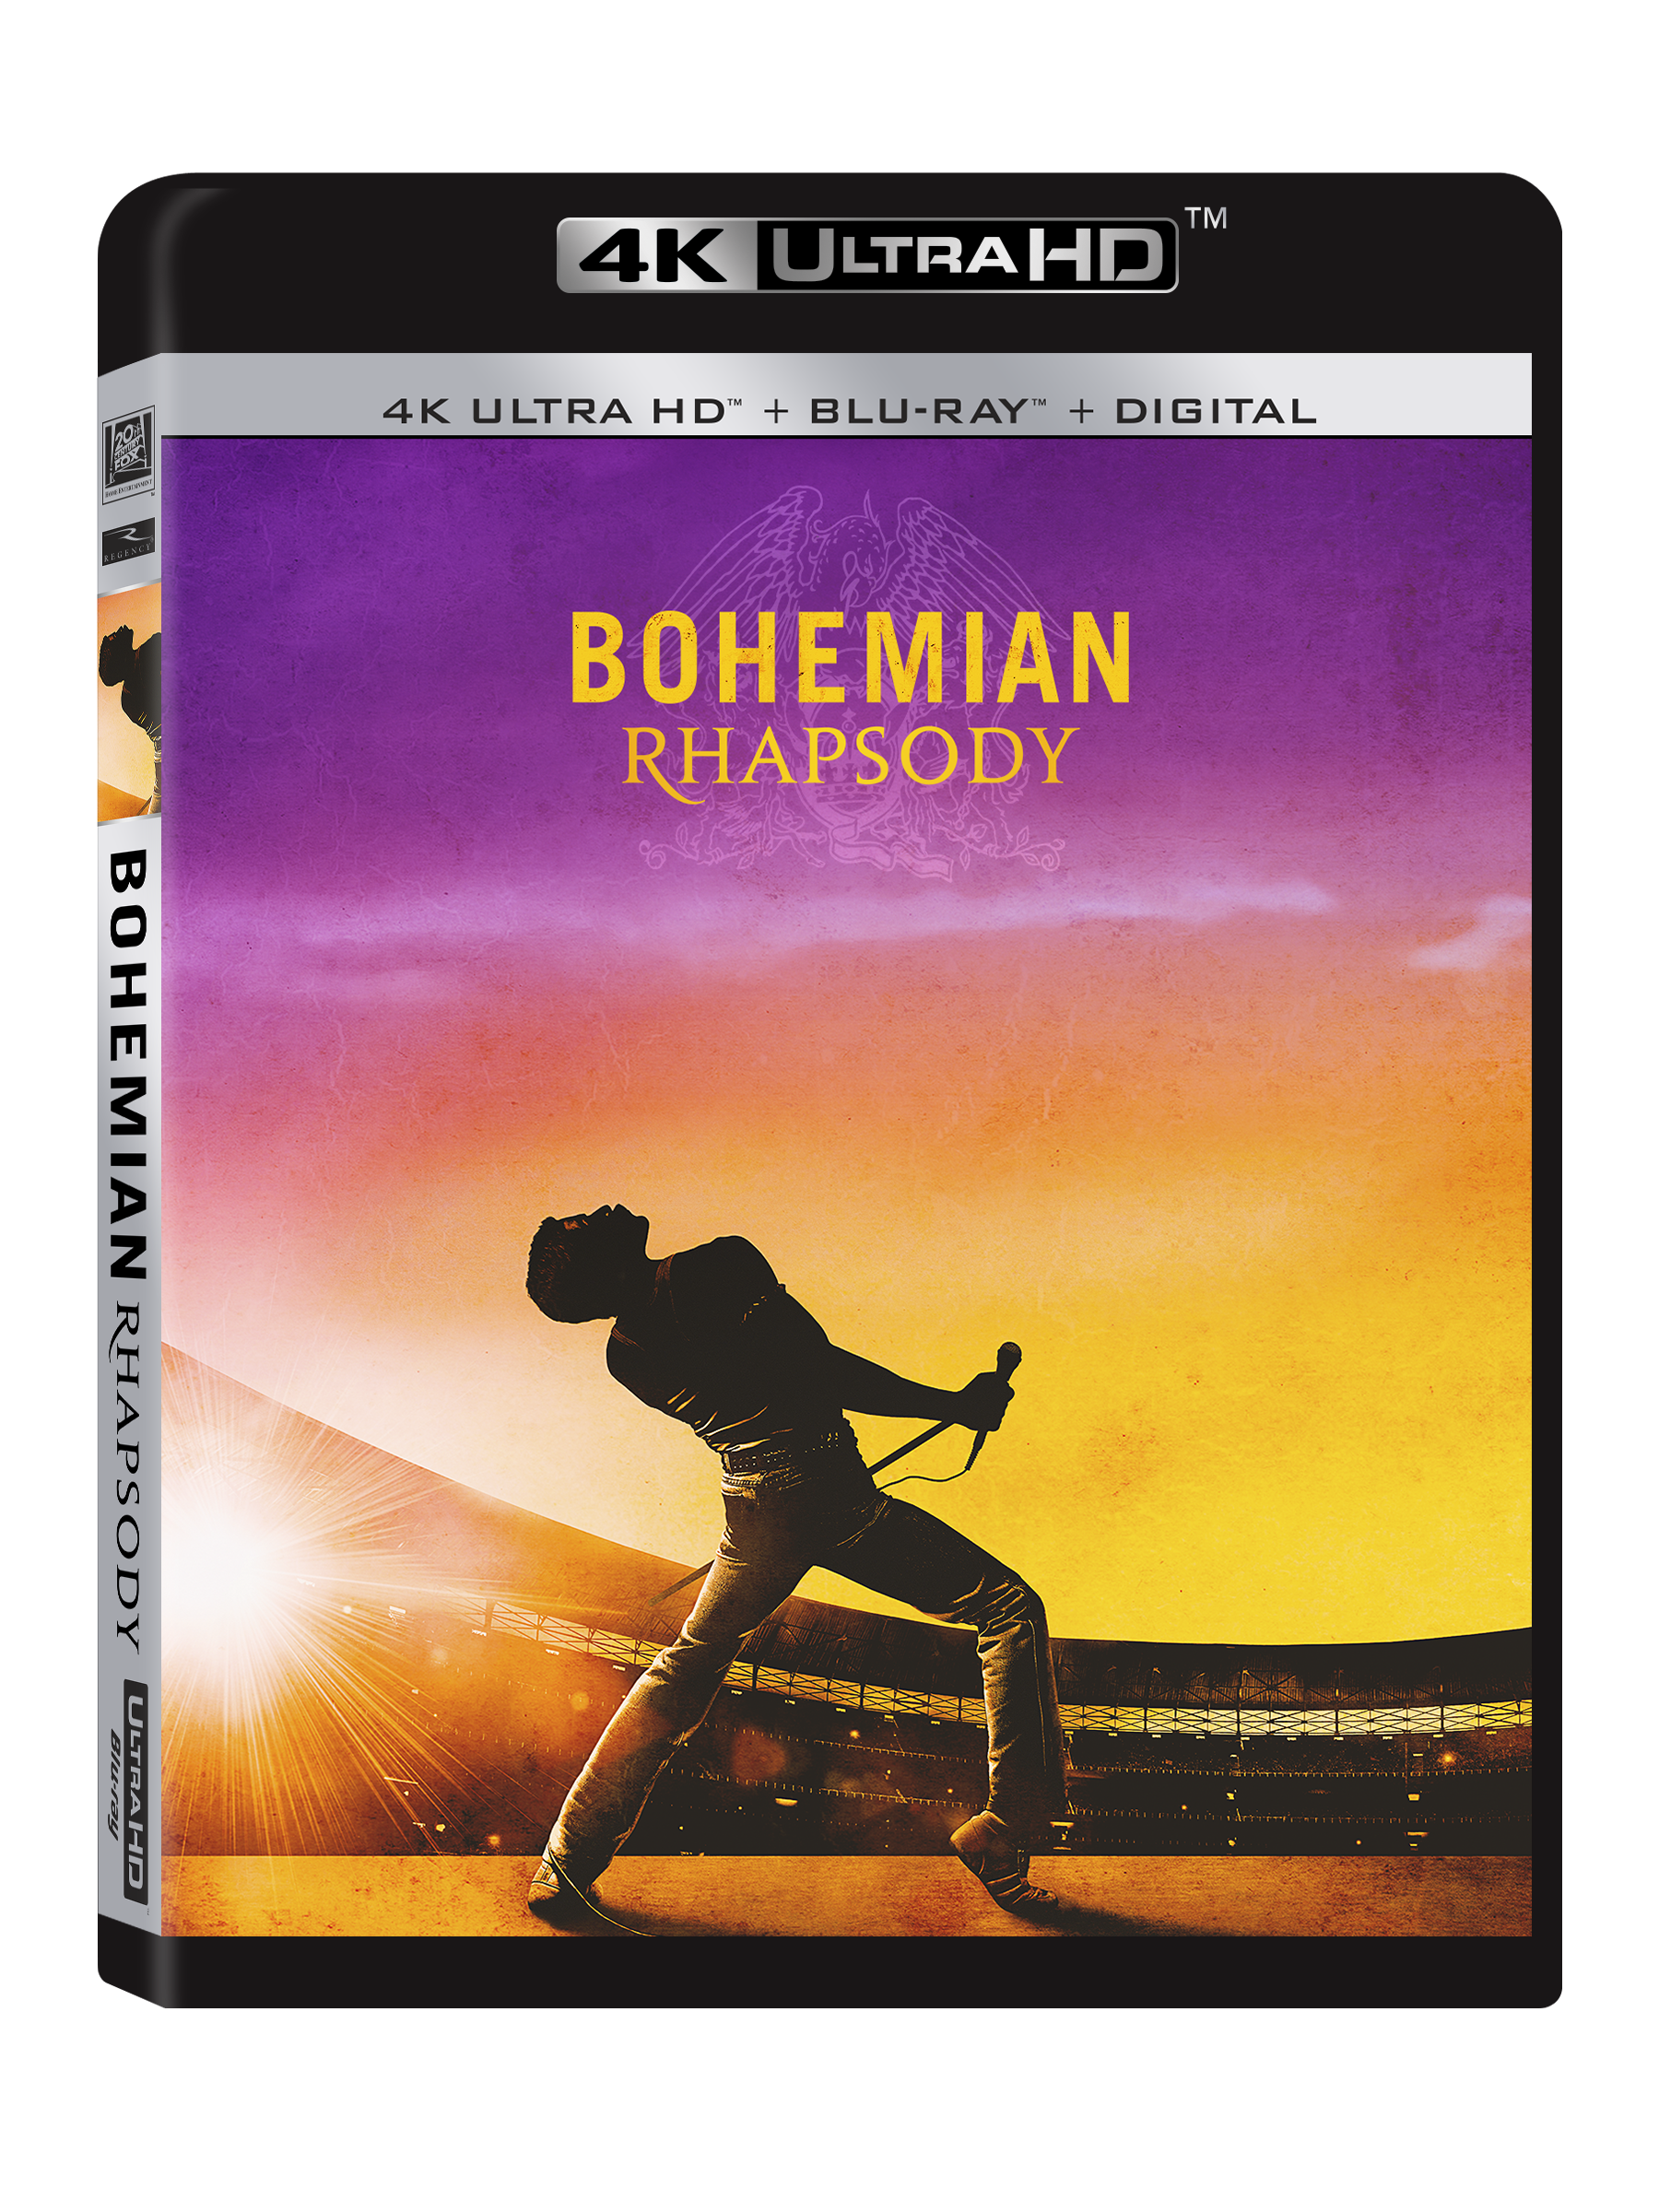 Bohemian Rhapsody 4K Ultra HD Combo Pack cover (20th Century Fox Home Entertainment)